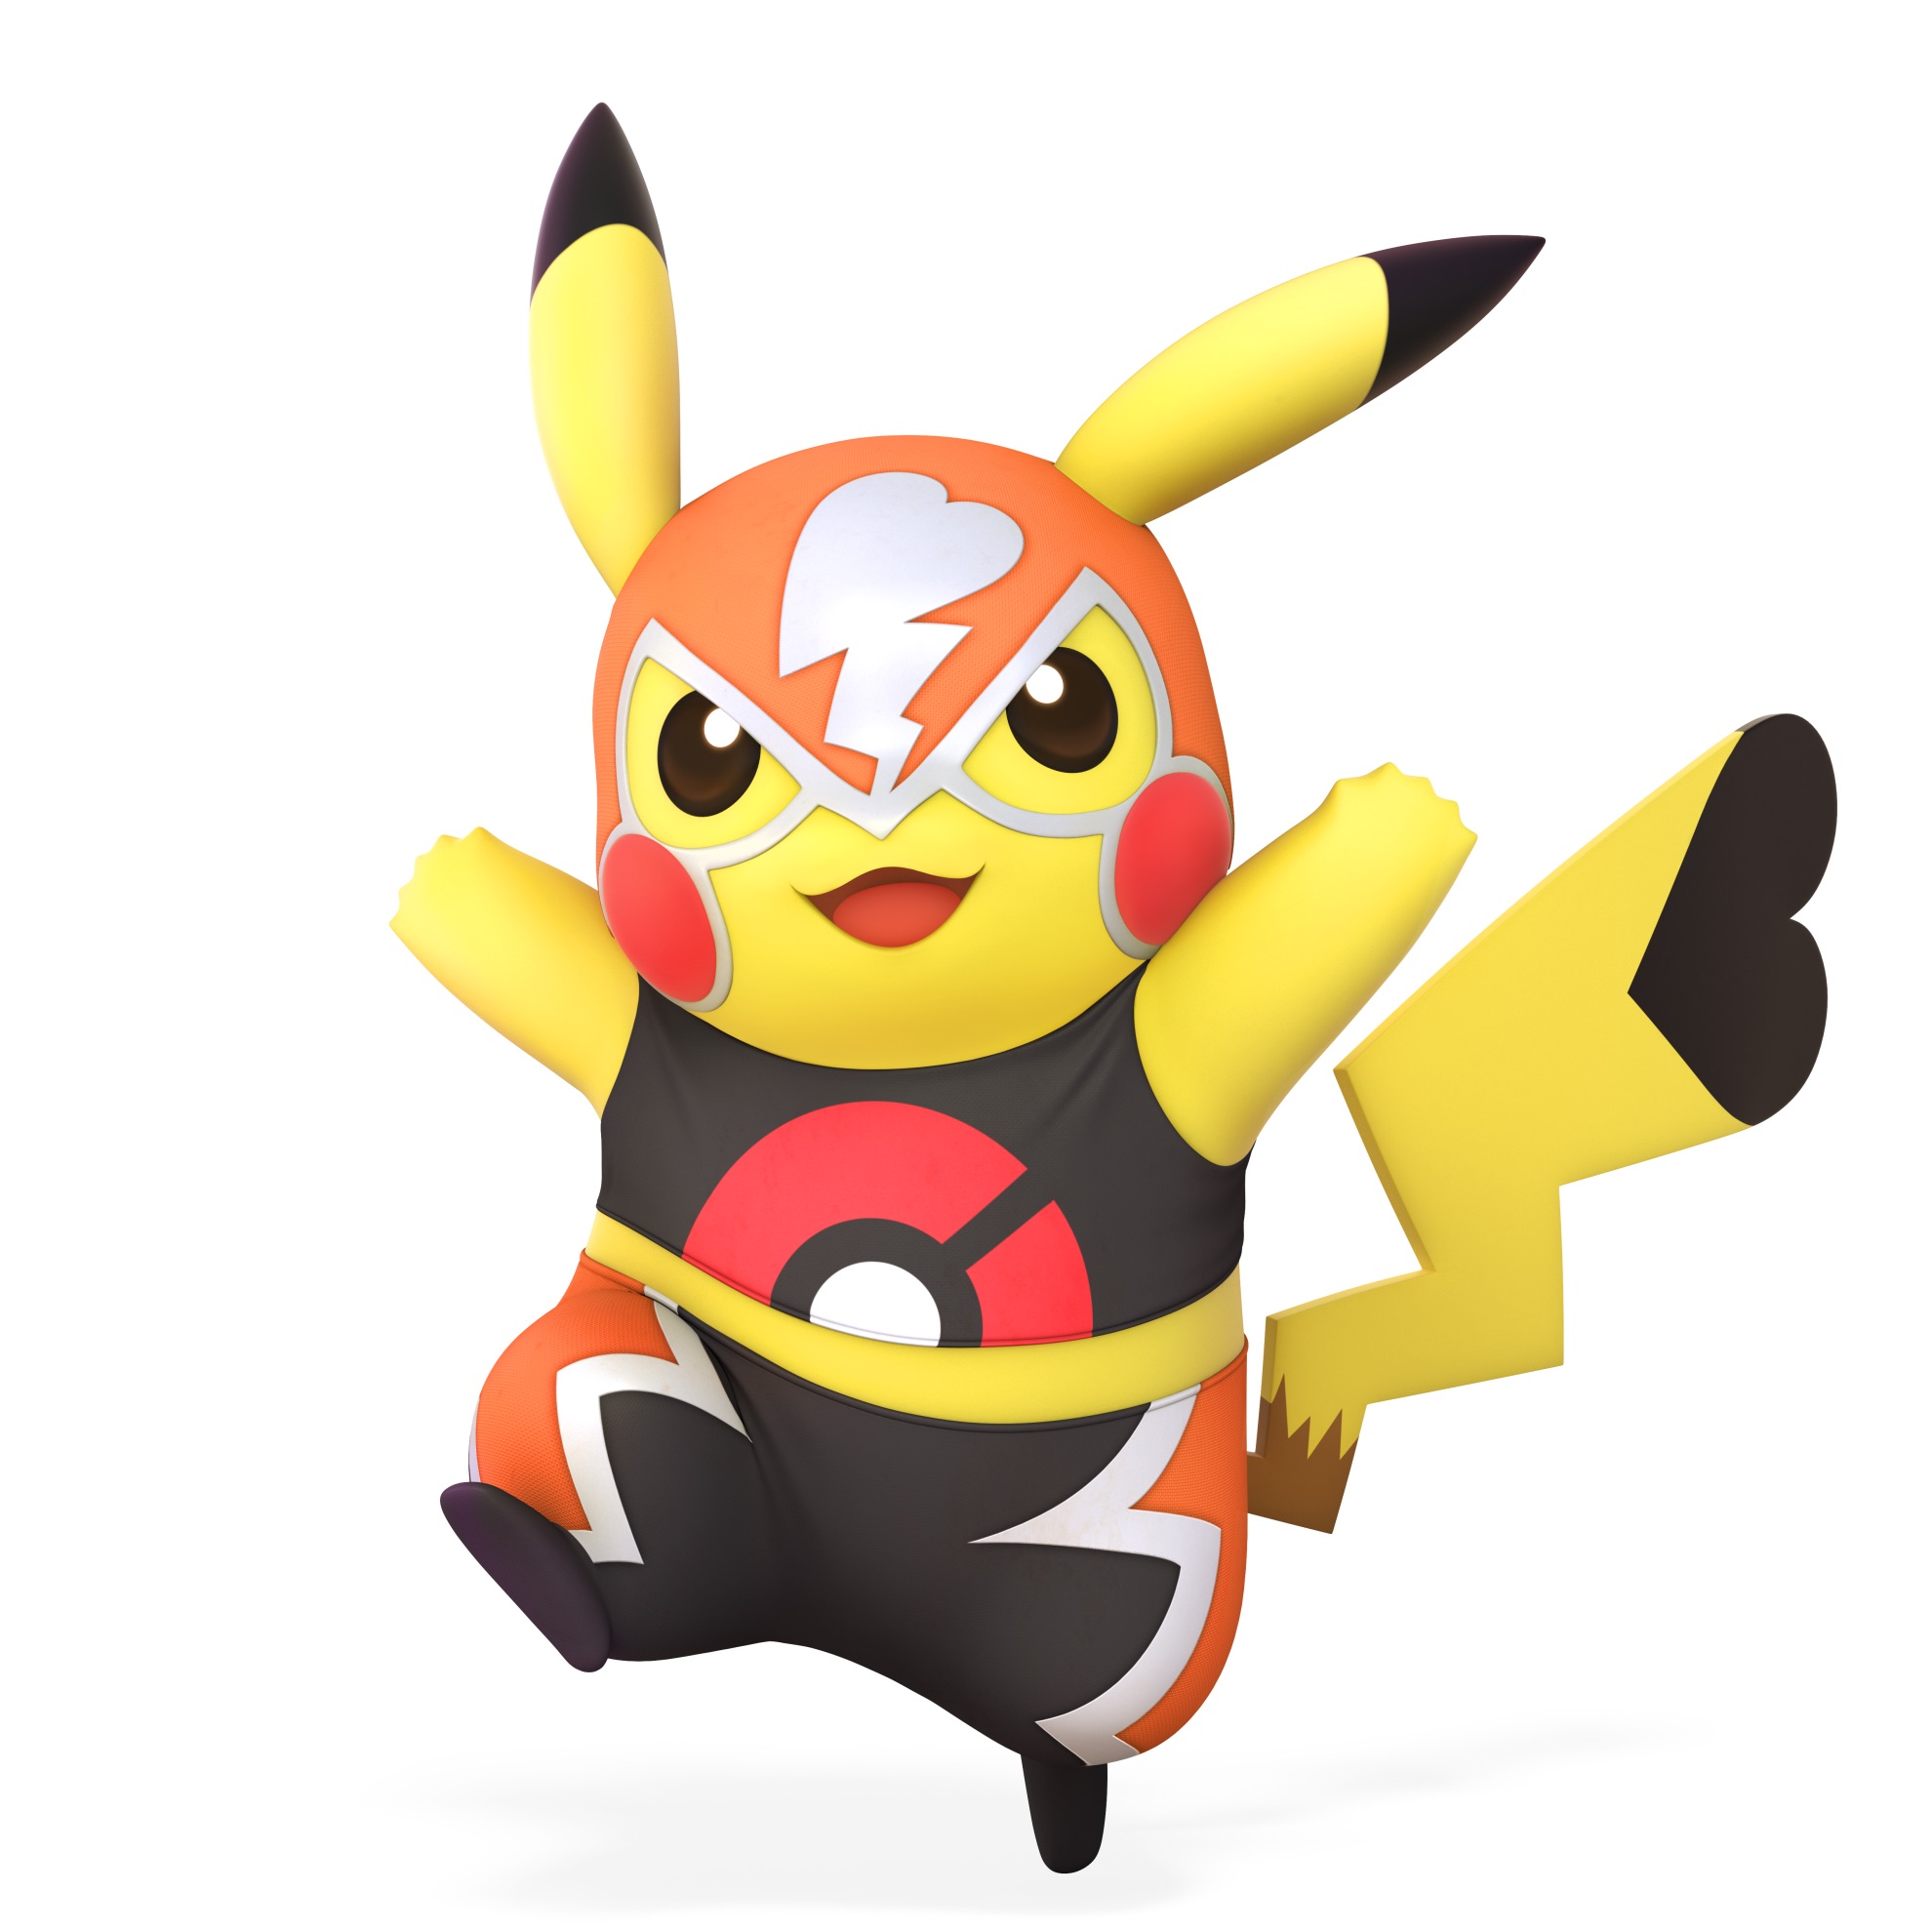 Pikachu Libre Super Smash Bros. Ultimate Character Render